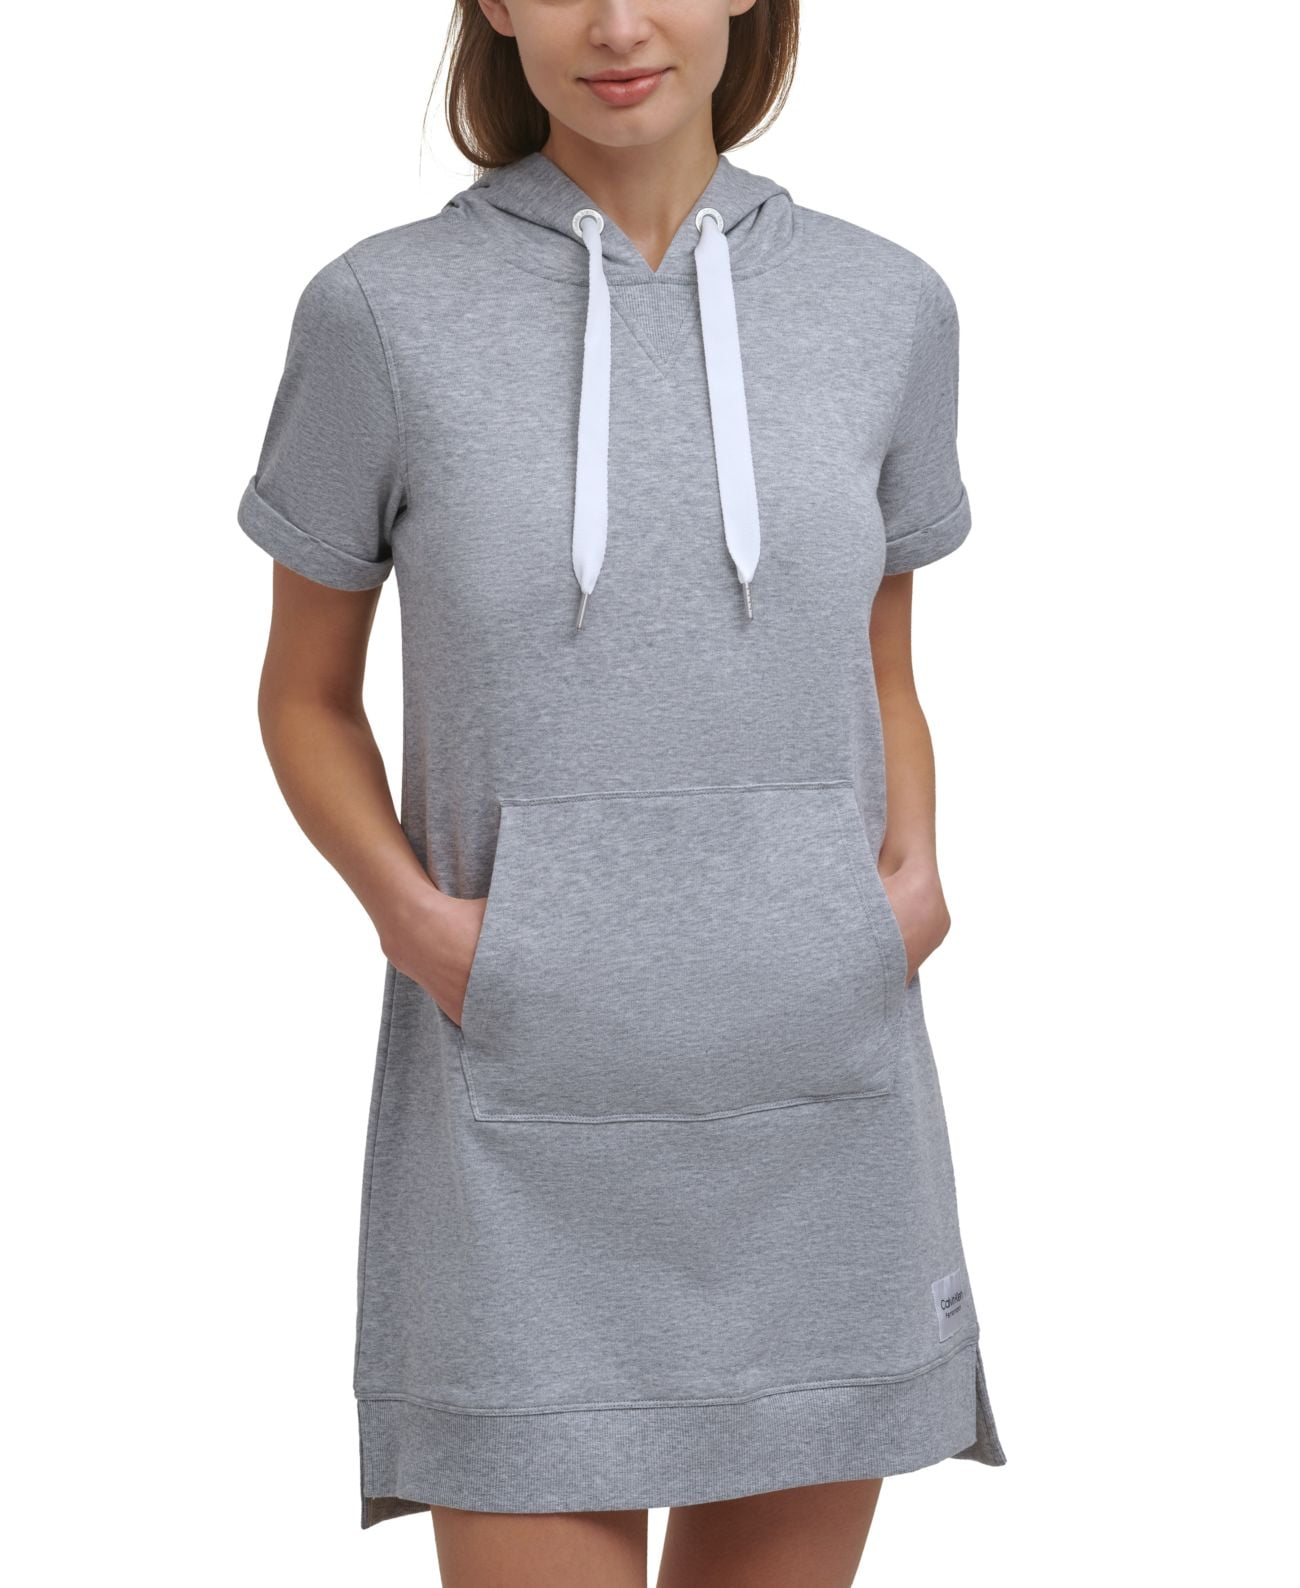 Calvin Performance Women's Hooded Sweatshirt Dress, Grey, X-Large Walmart.com